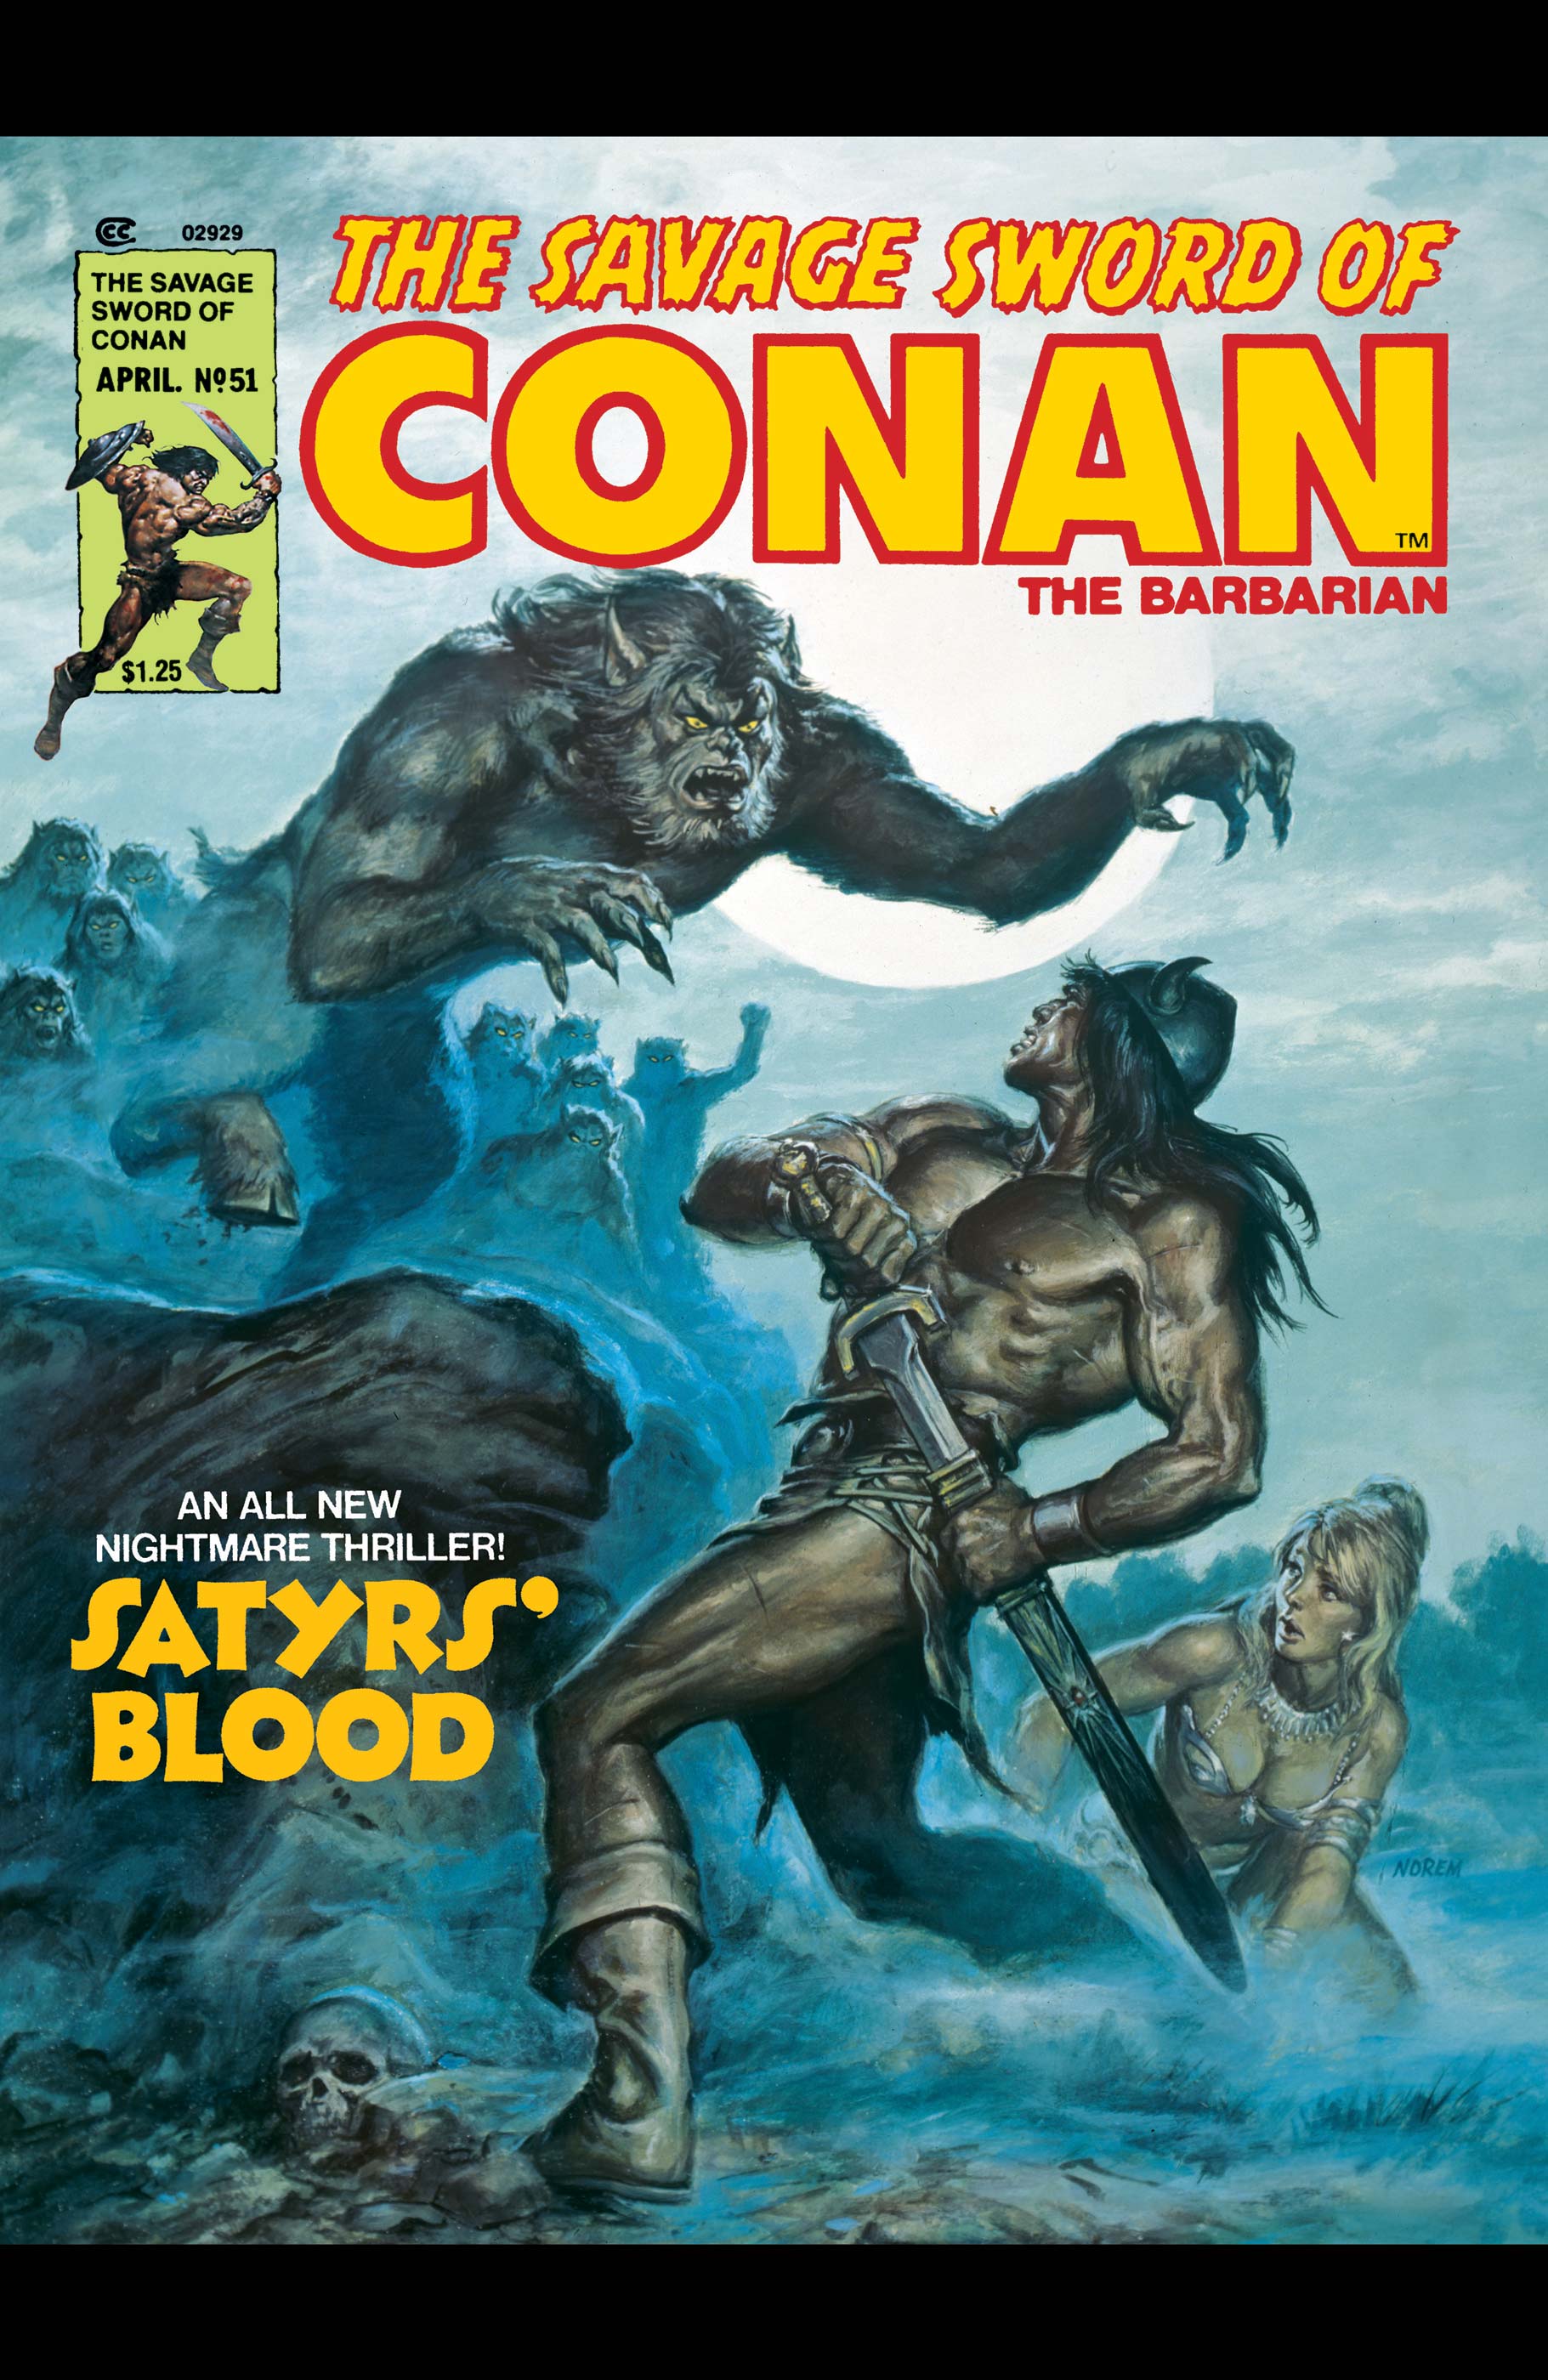 The Savage Sword of Conan (1974) #51